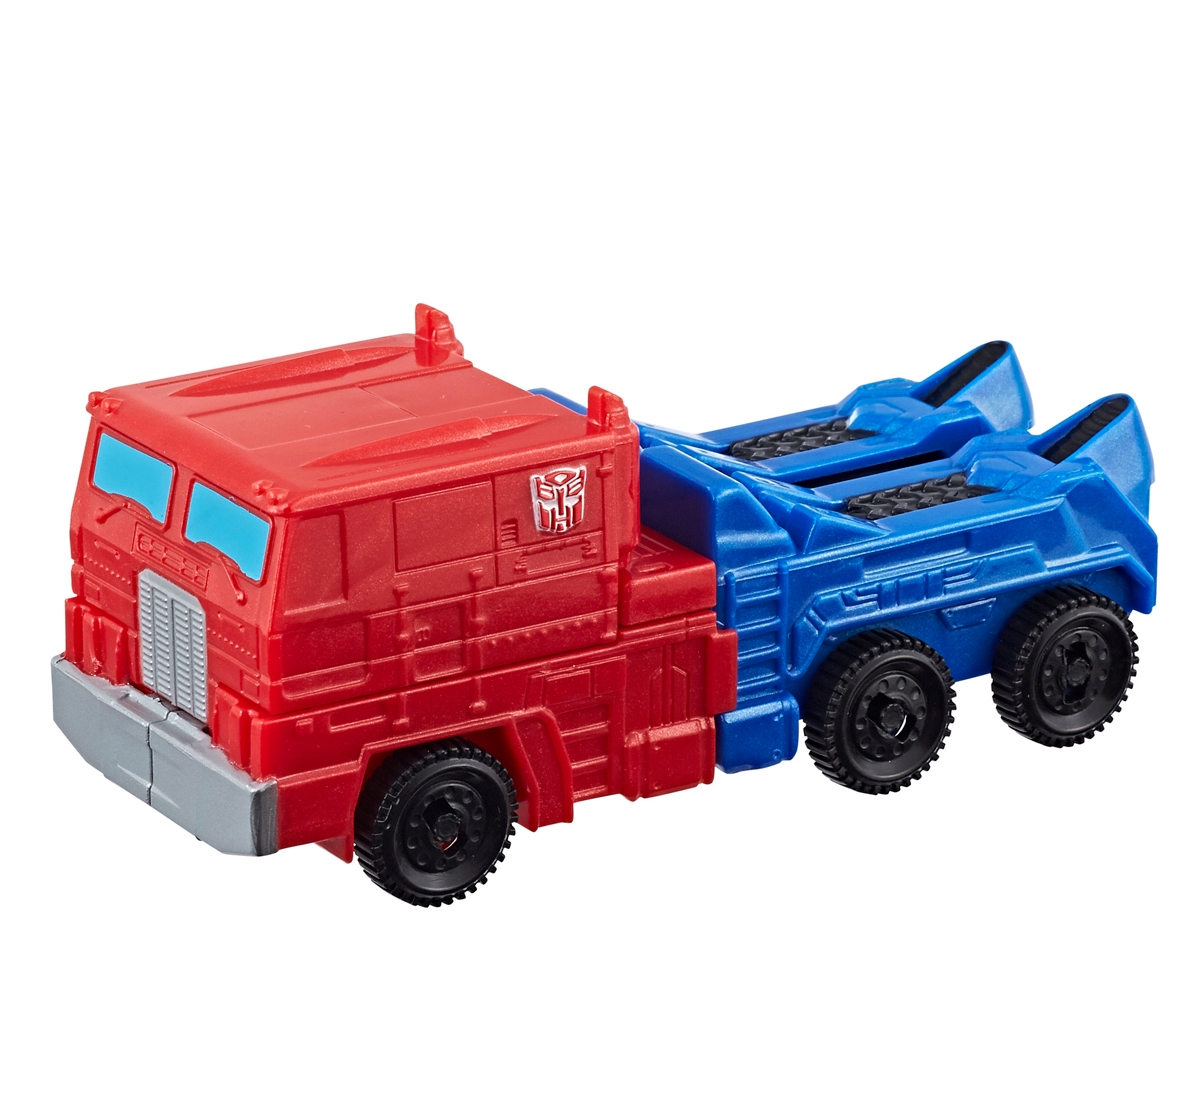 Transformers | Transformers Authentic Optimus Prime for Kids 6Y+, Multicolour 1